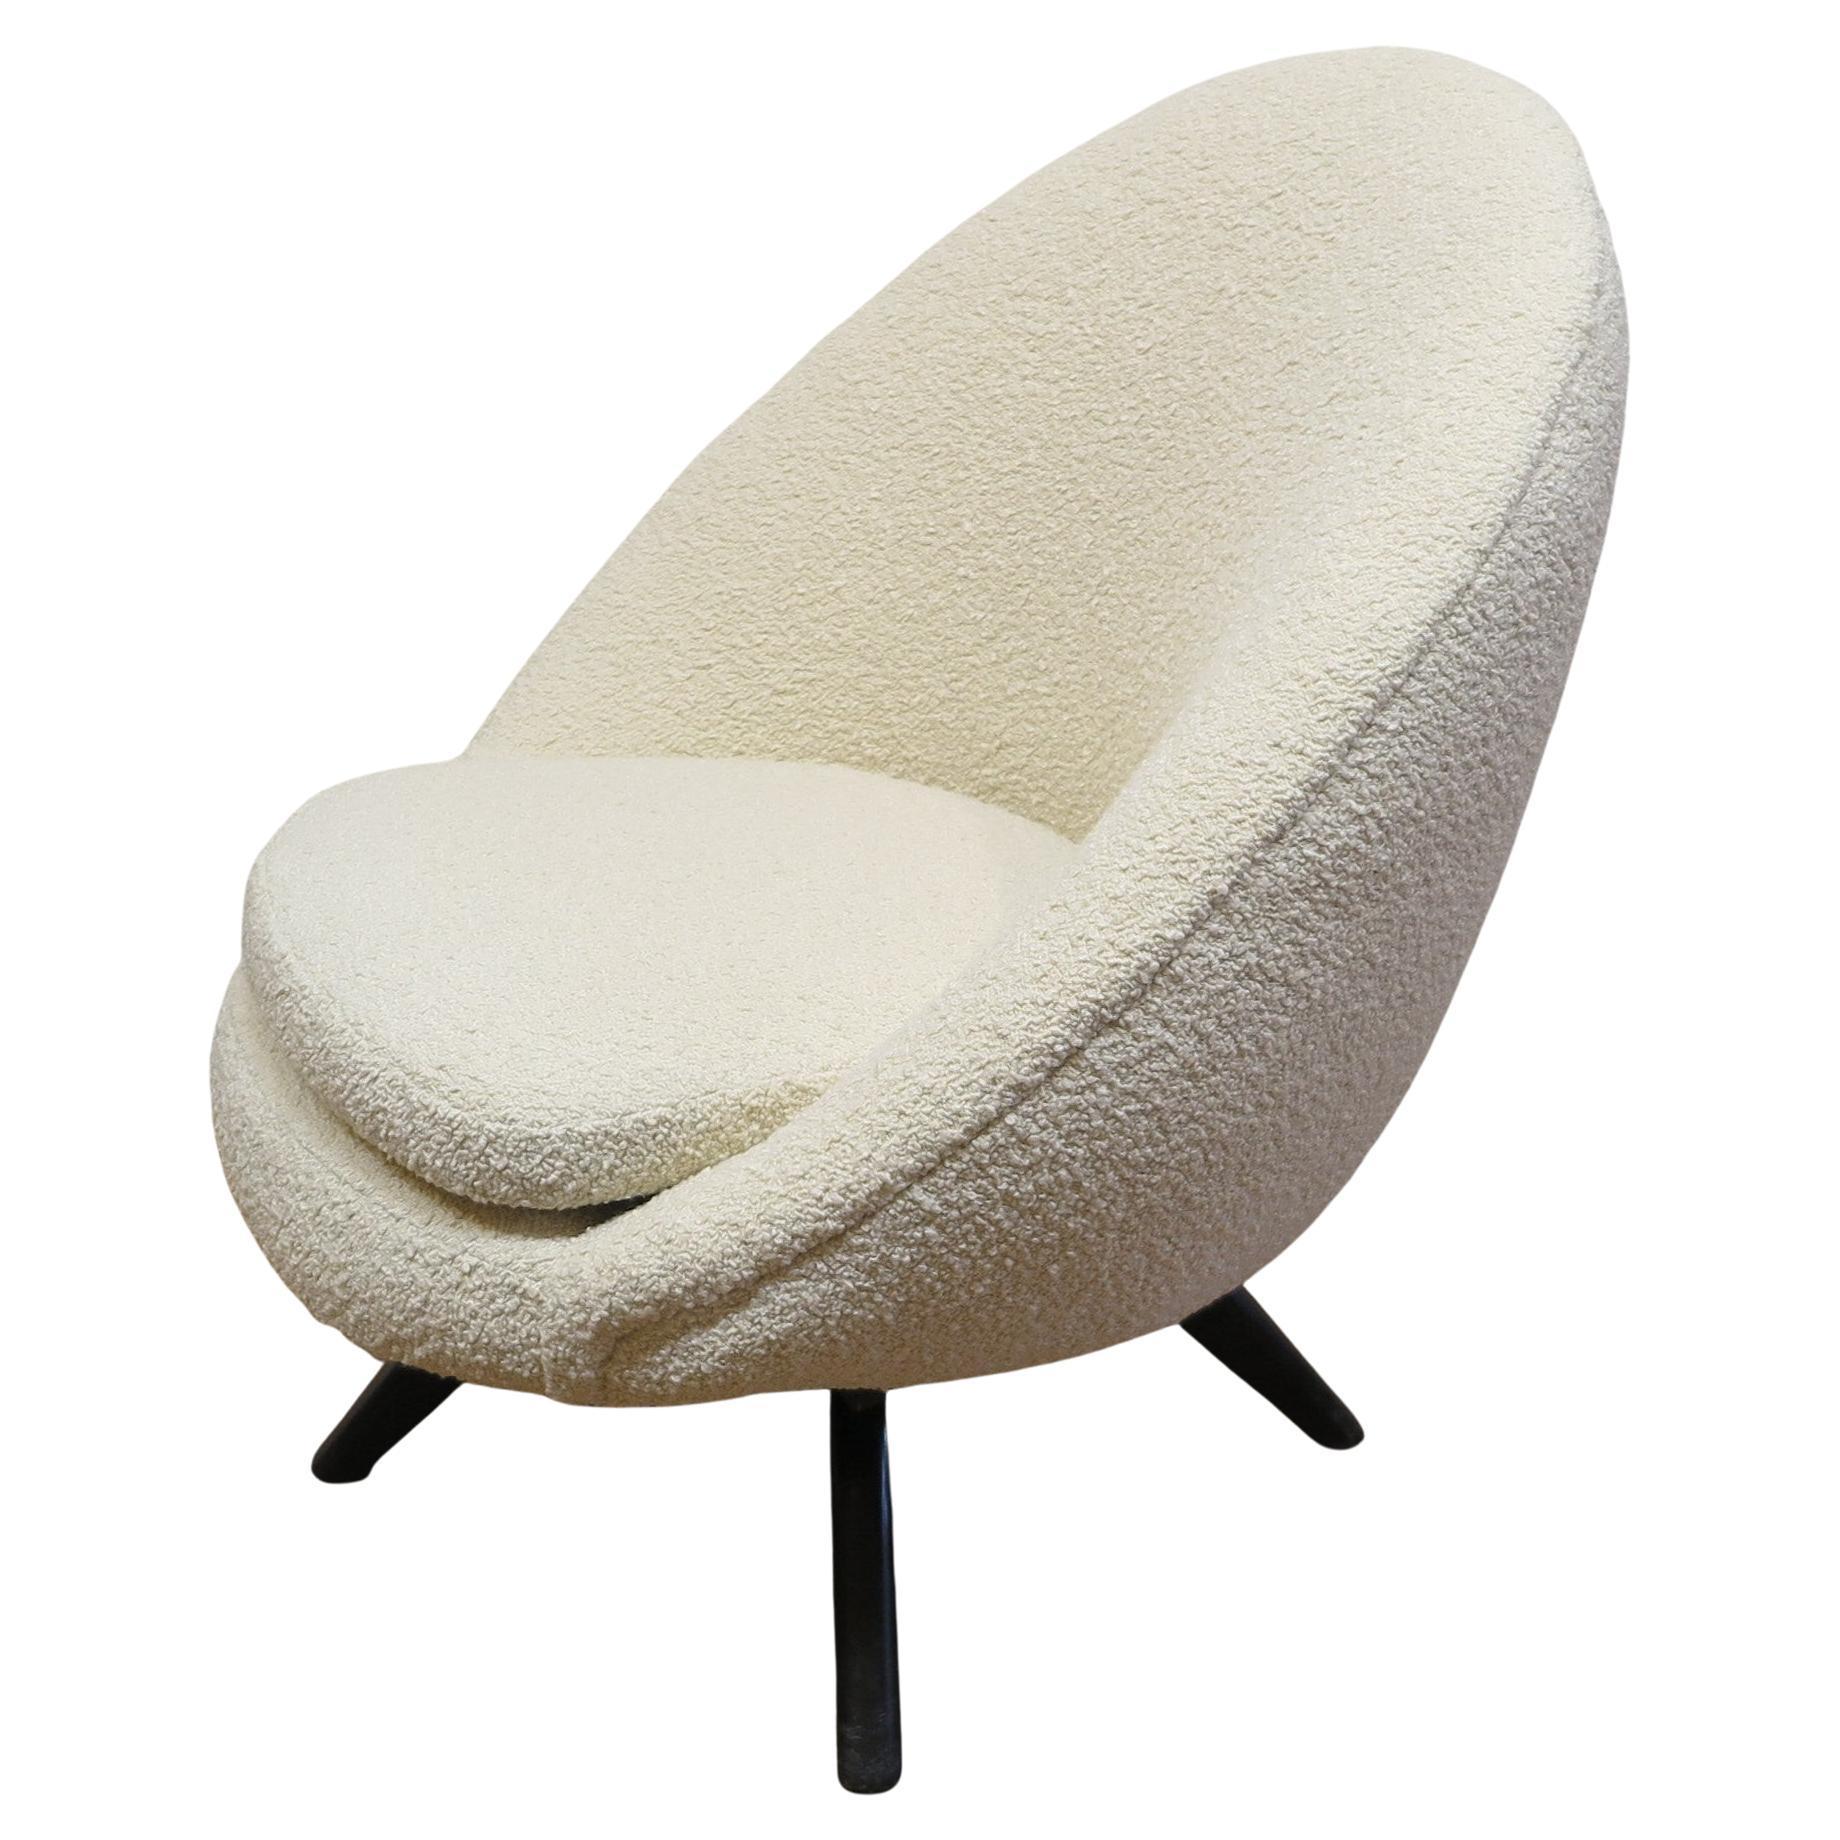 Mid-Century Modern egg chair, pod chair, on swivel base. Mid Century Swivel Egg Chair made by 